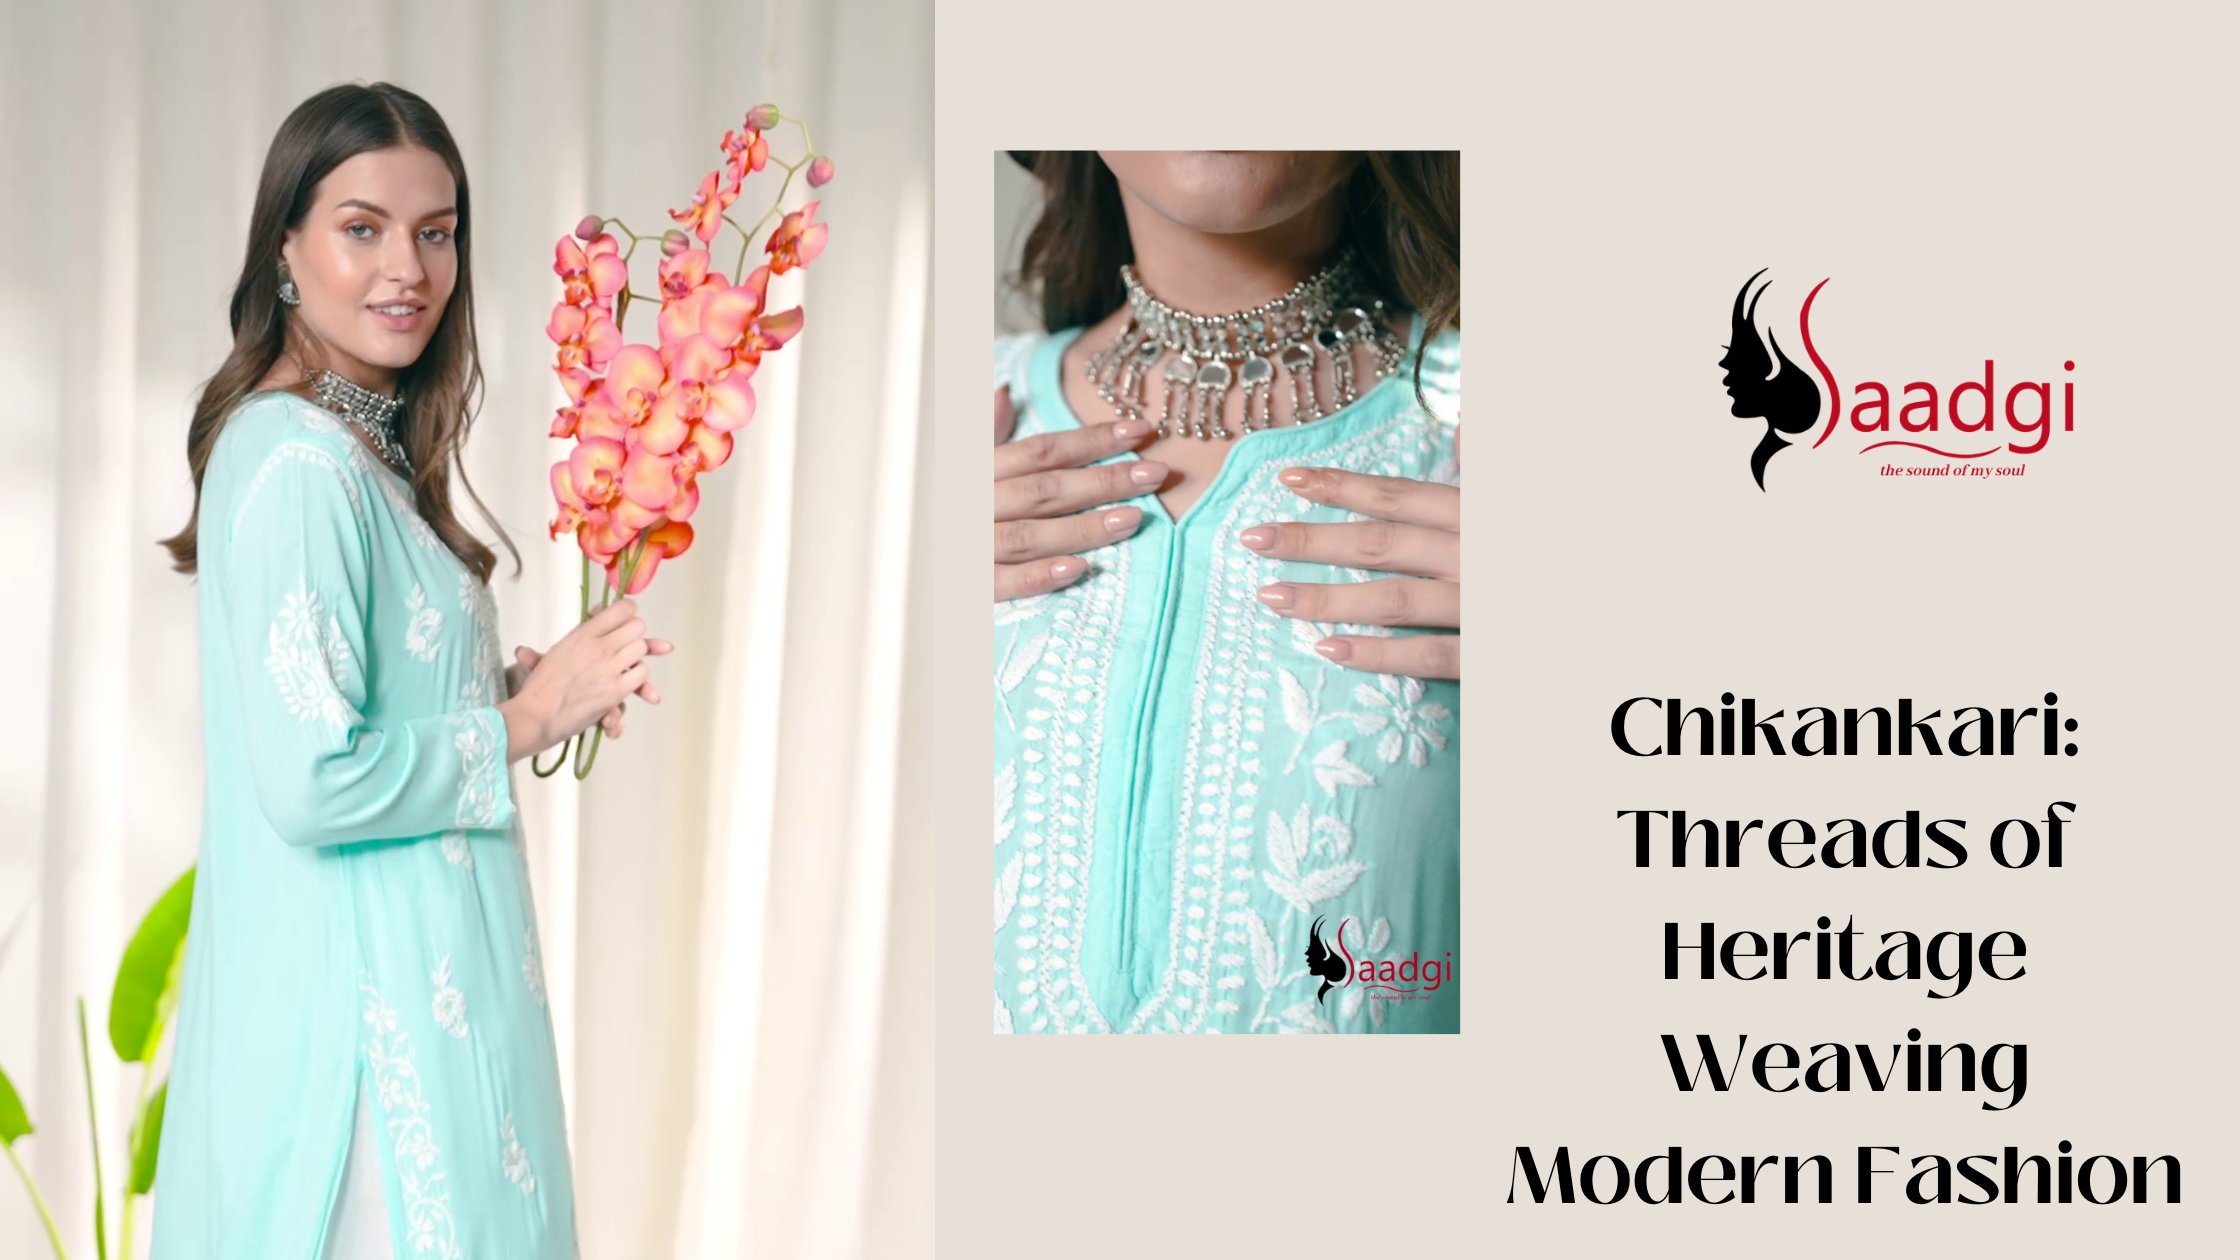 Chikankari: Threads of Heritage Weaving Modern Fashion